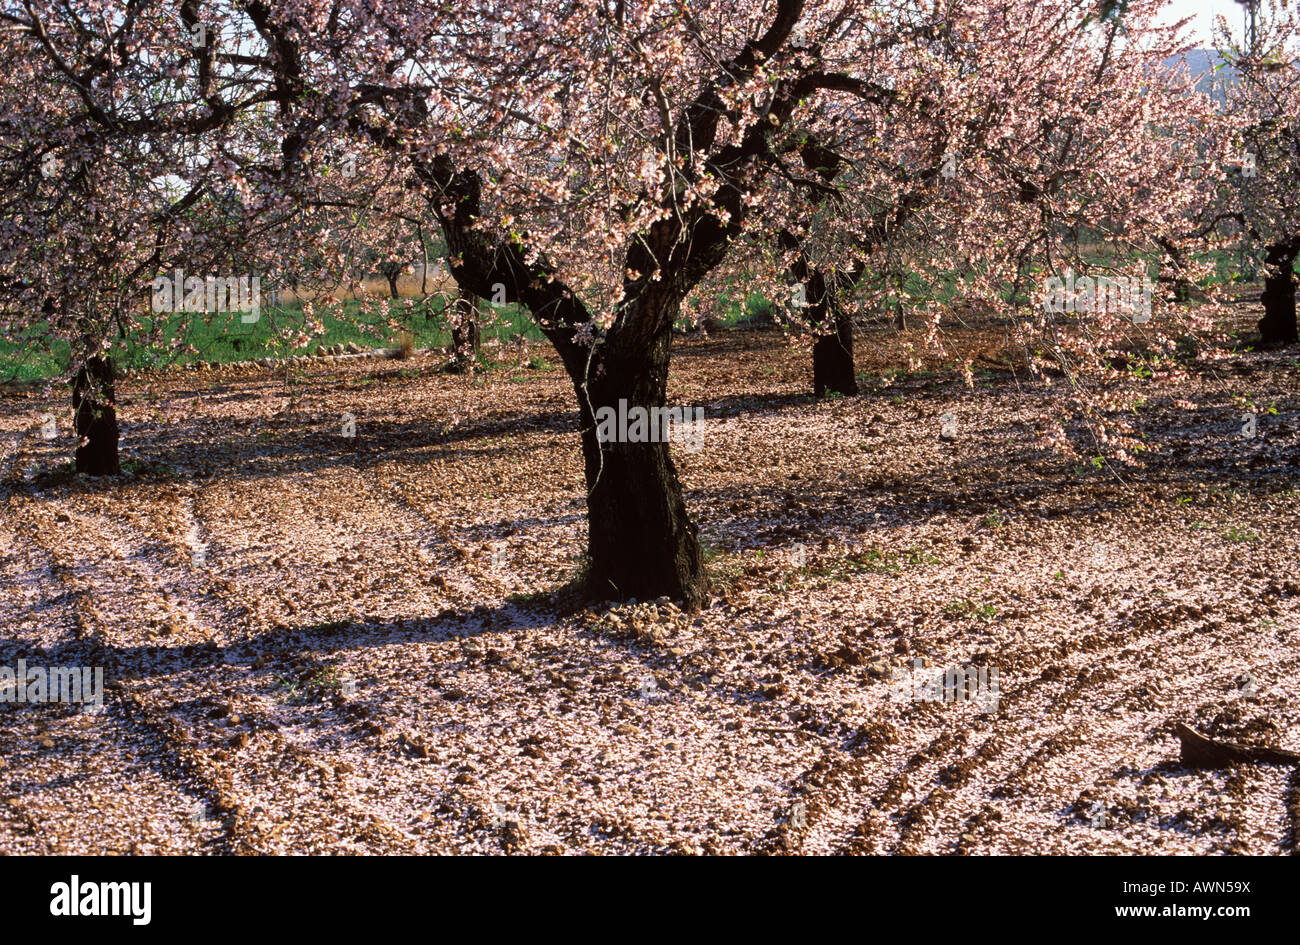 Flowering almond trees, Valencia, Spain Stock Photo